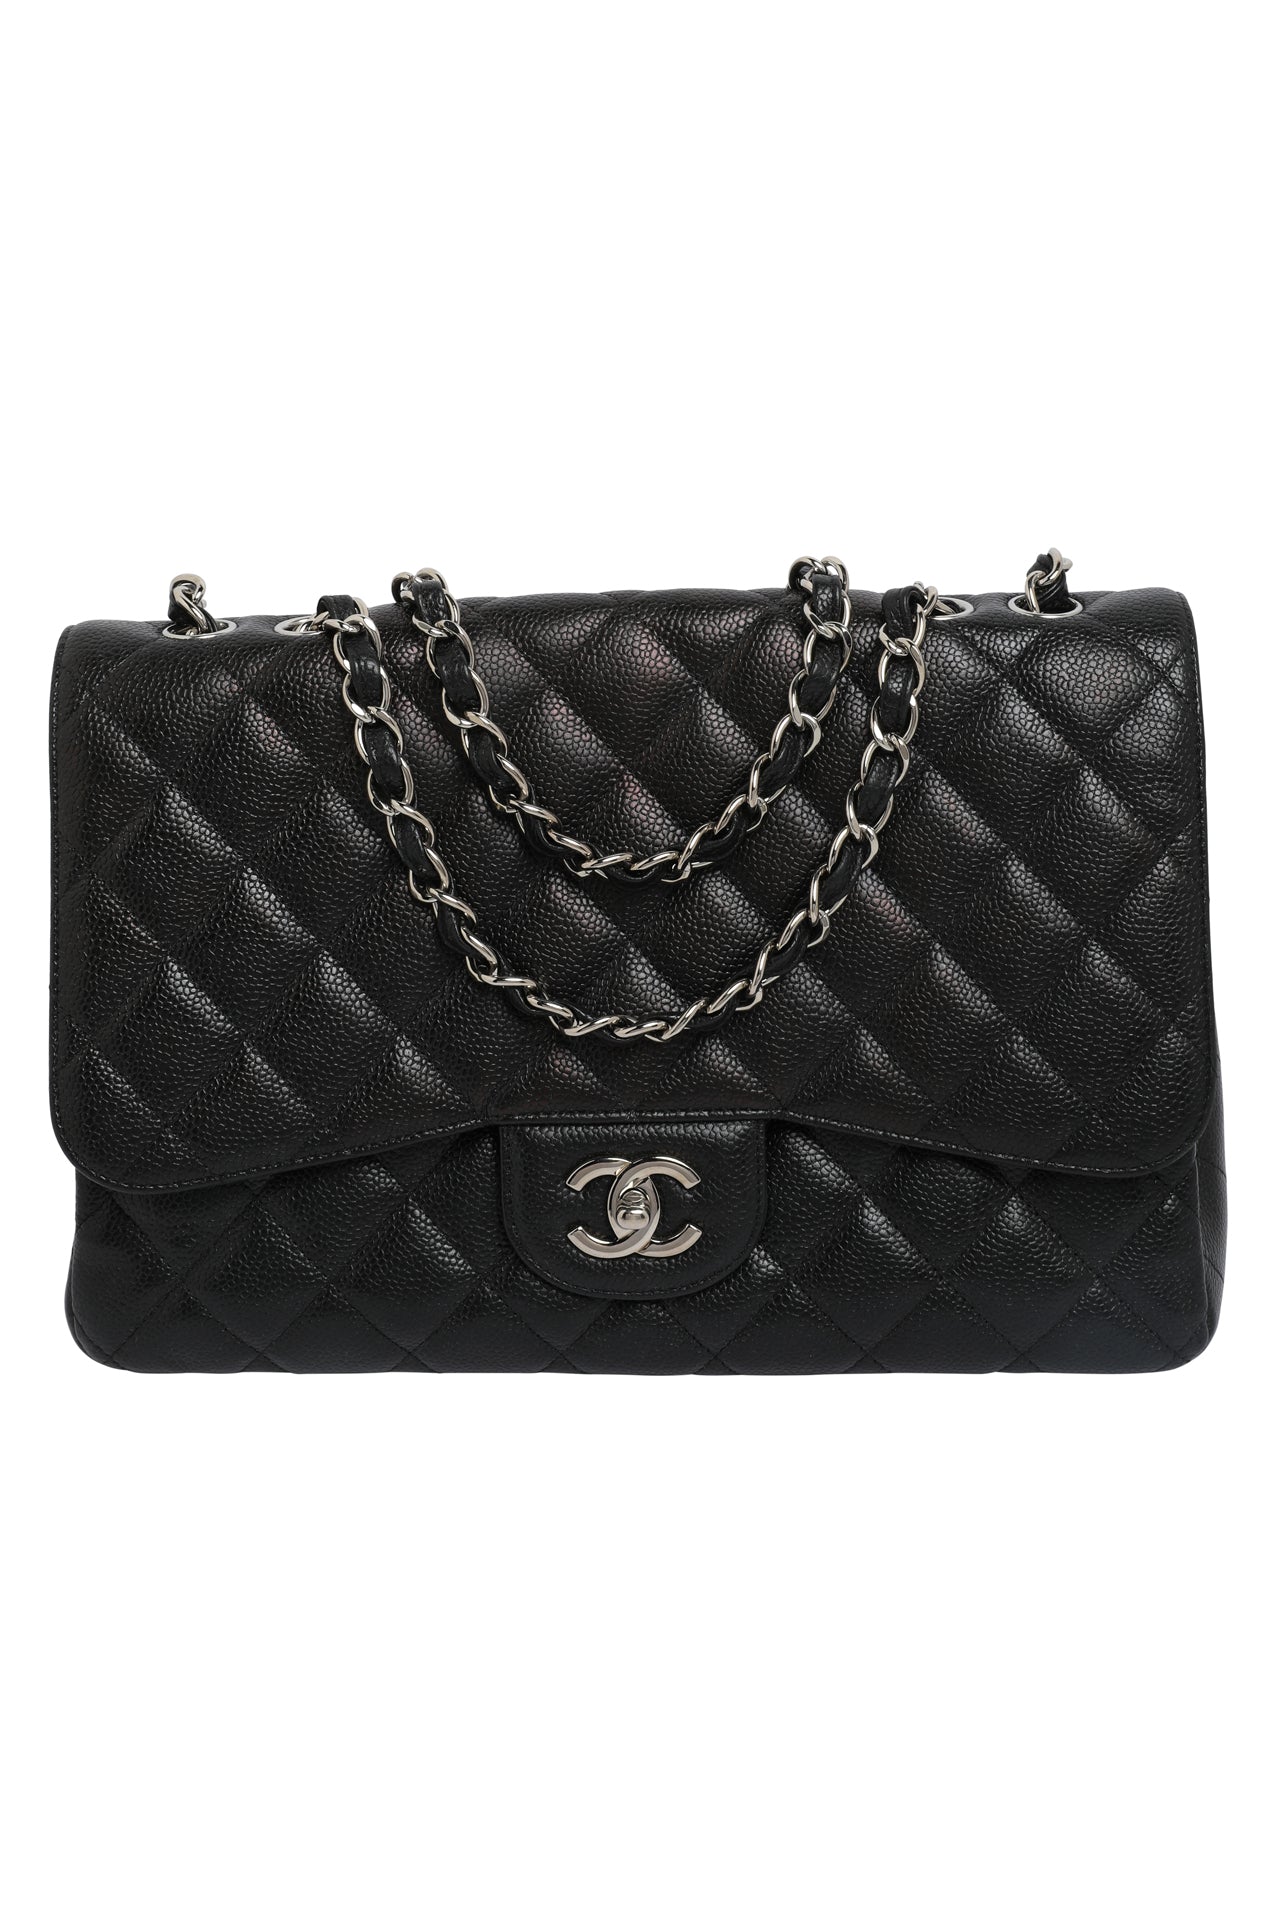 Chanel White Leather Jumbo Classic Single Flap Bag